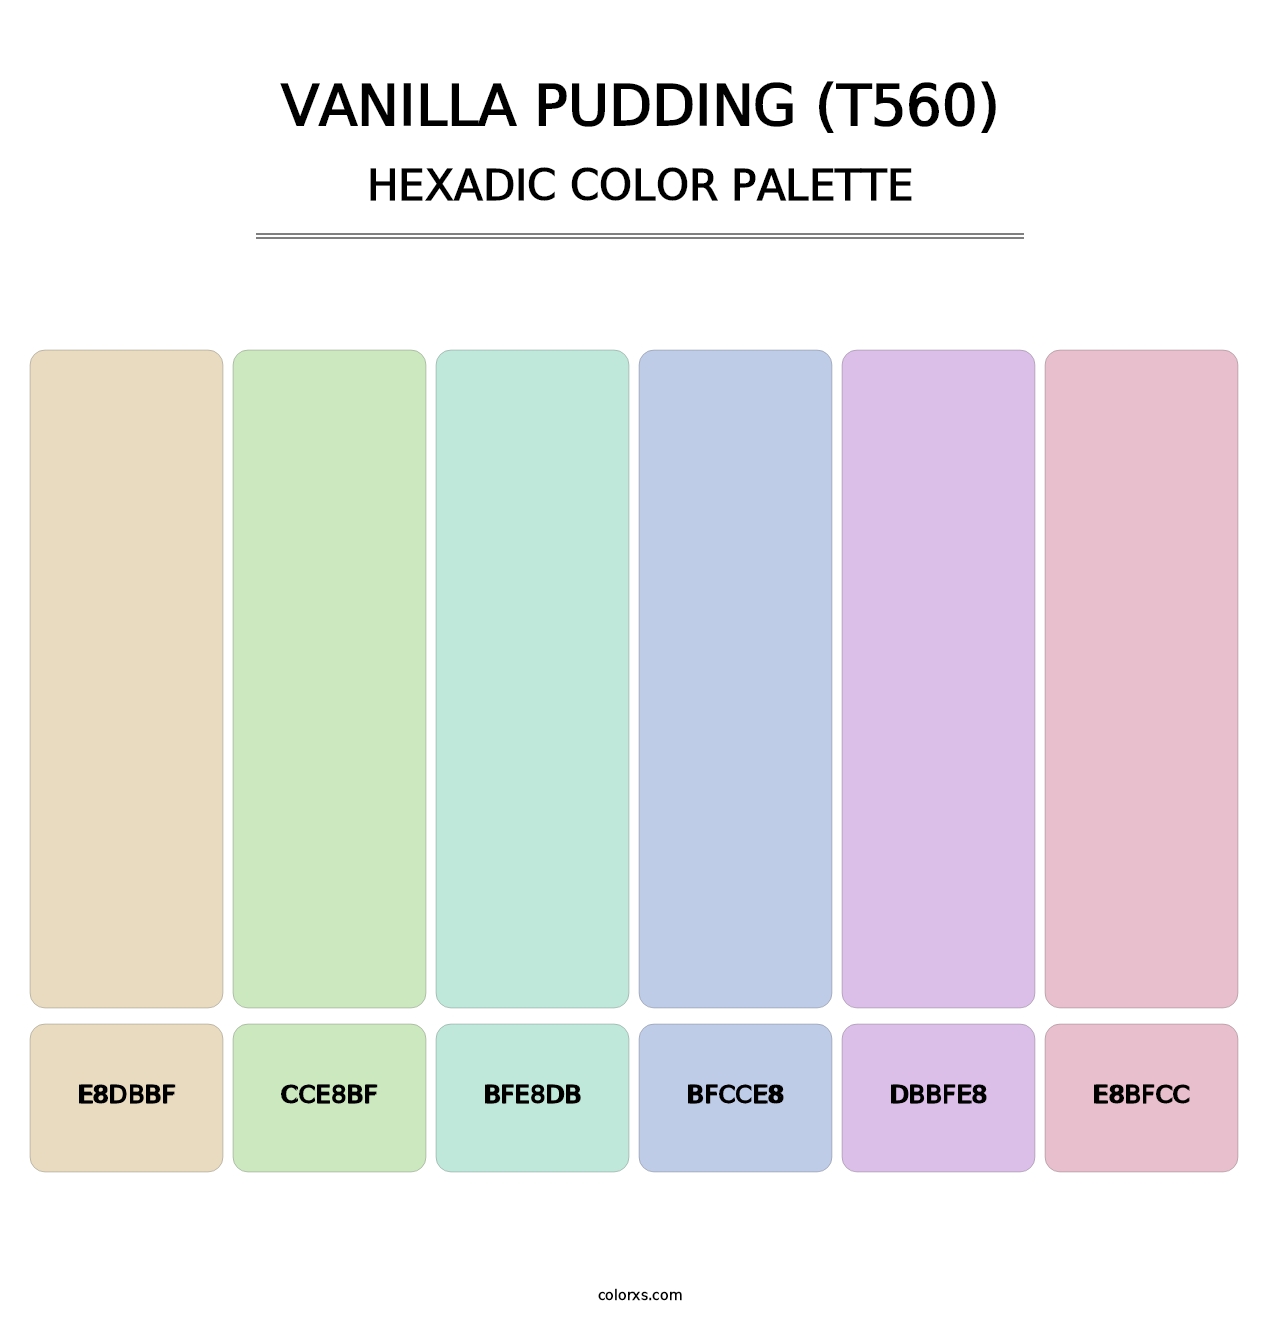 Vanilla Pudding (T560) - Hexadic Color Palette